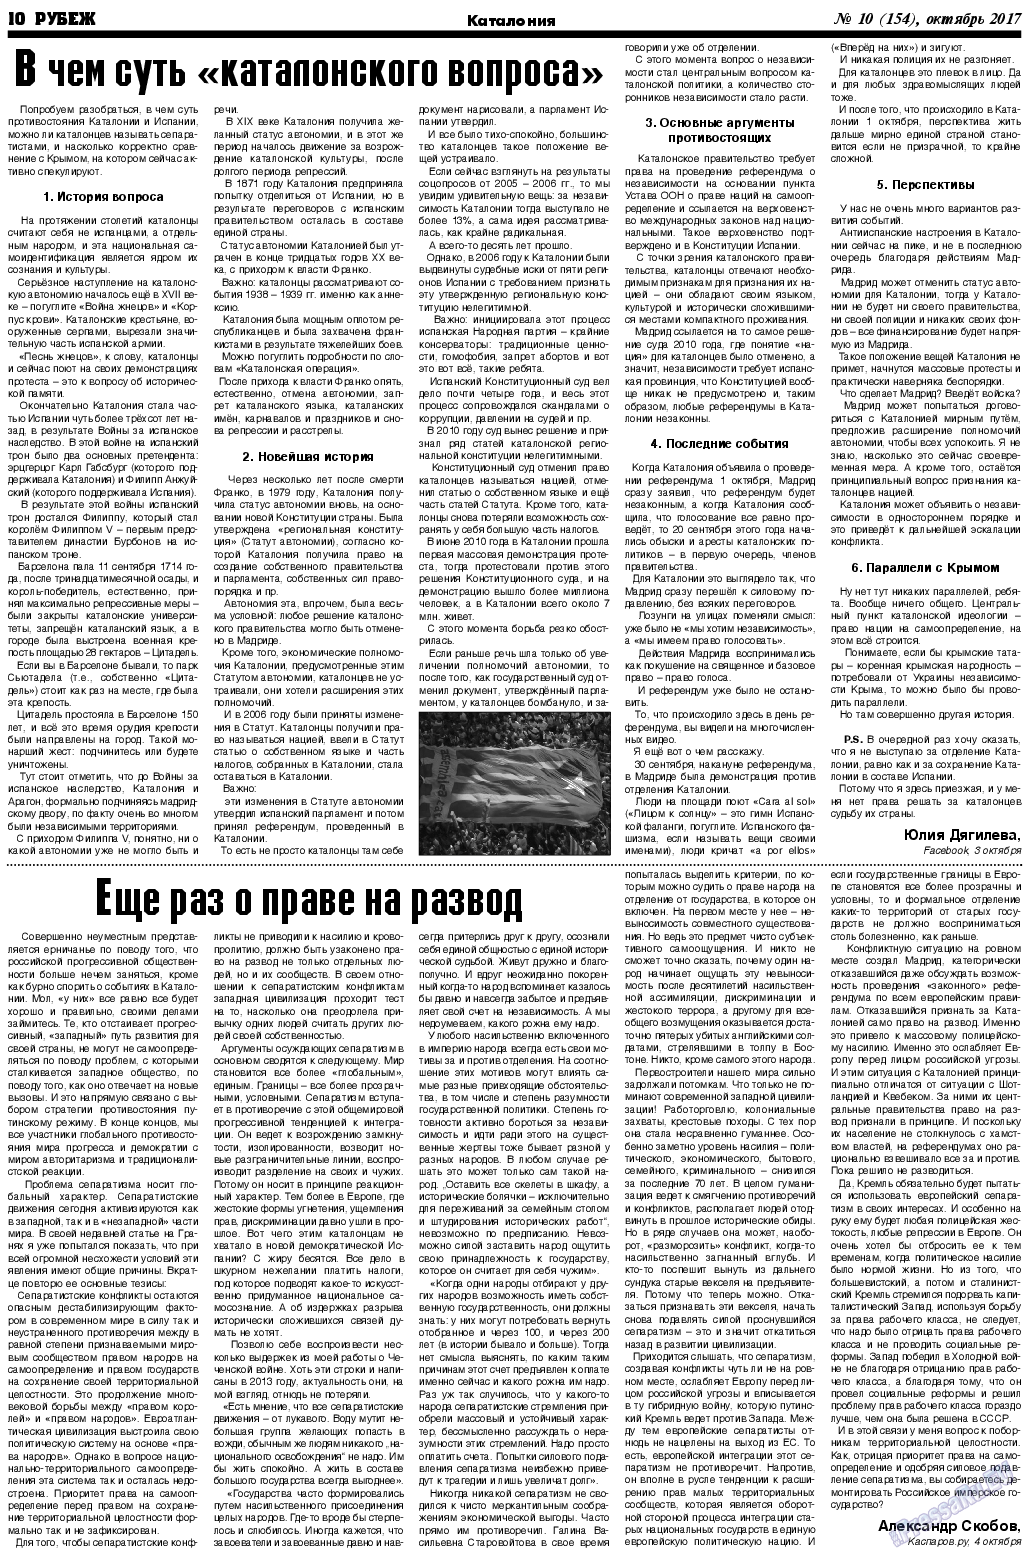 Рубеж, газета. 2017 №10 стр.10